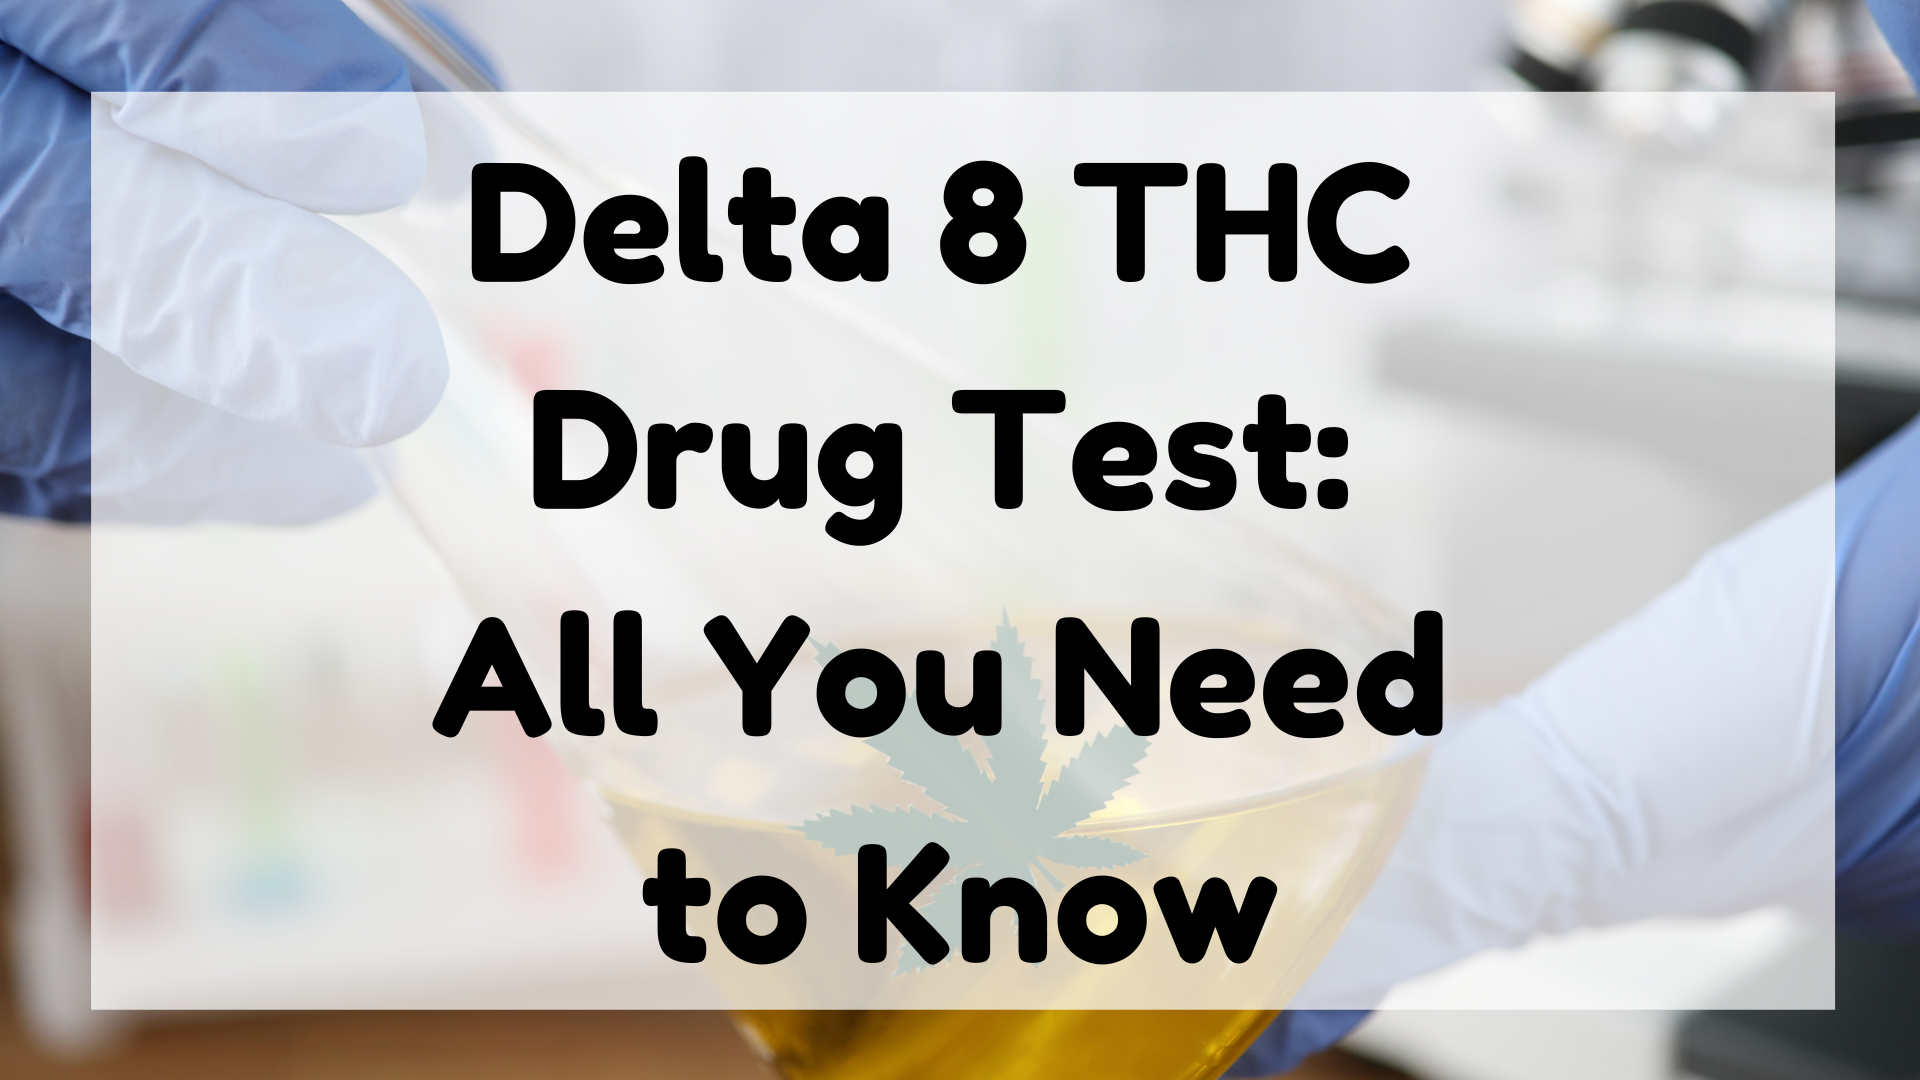 Delta 8 THC Drug Test featured image